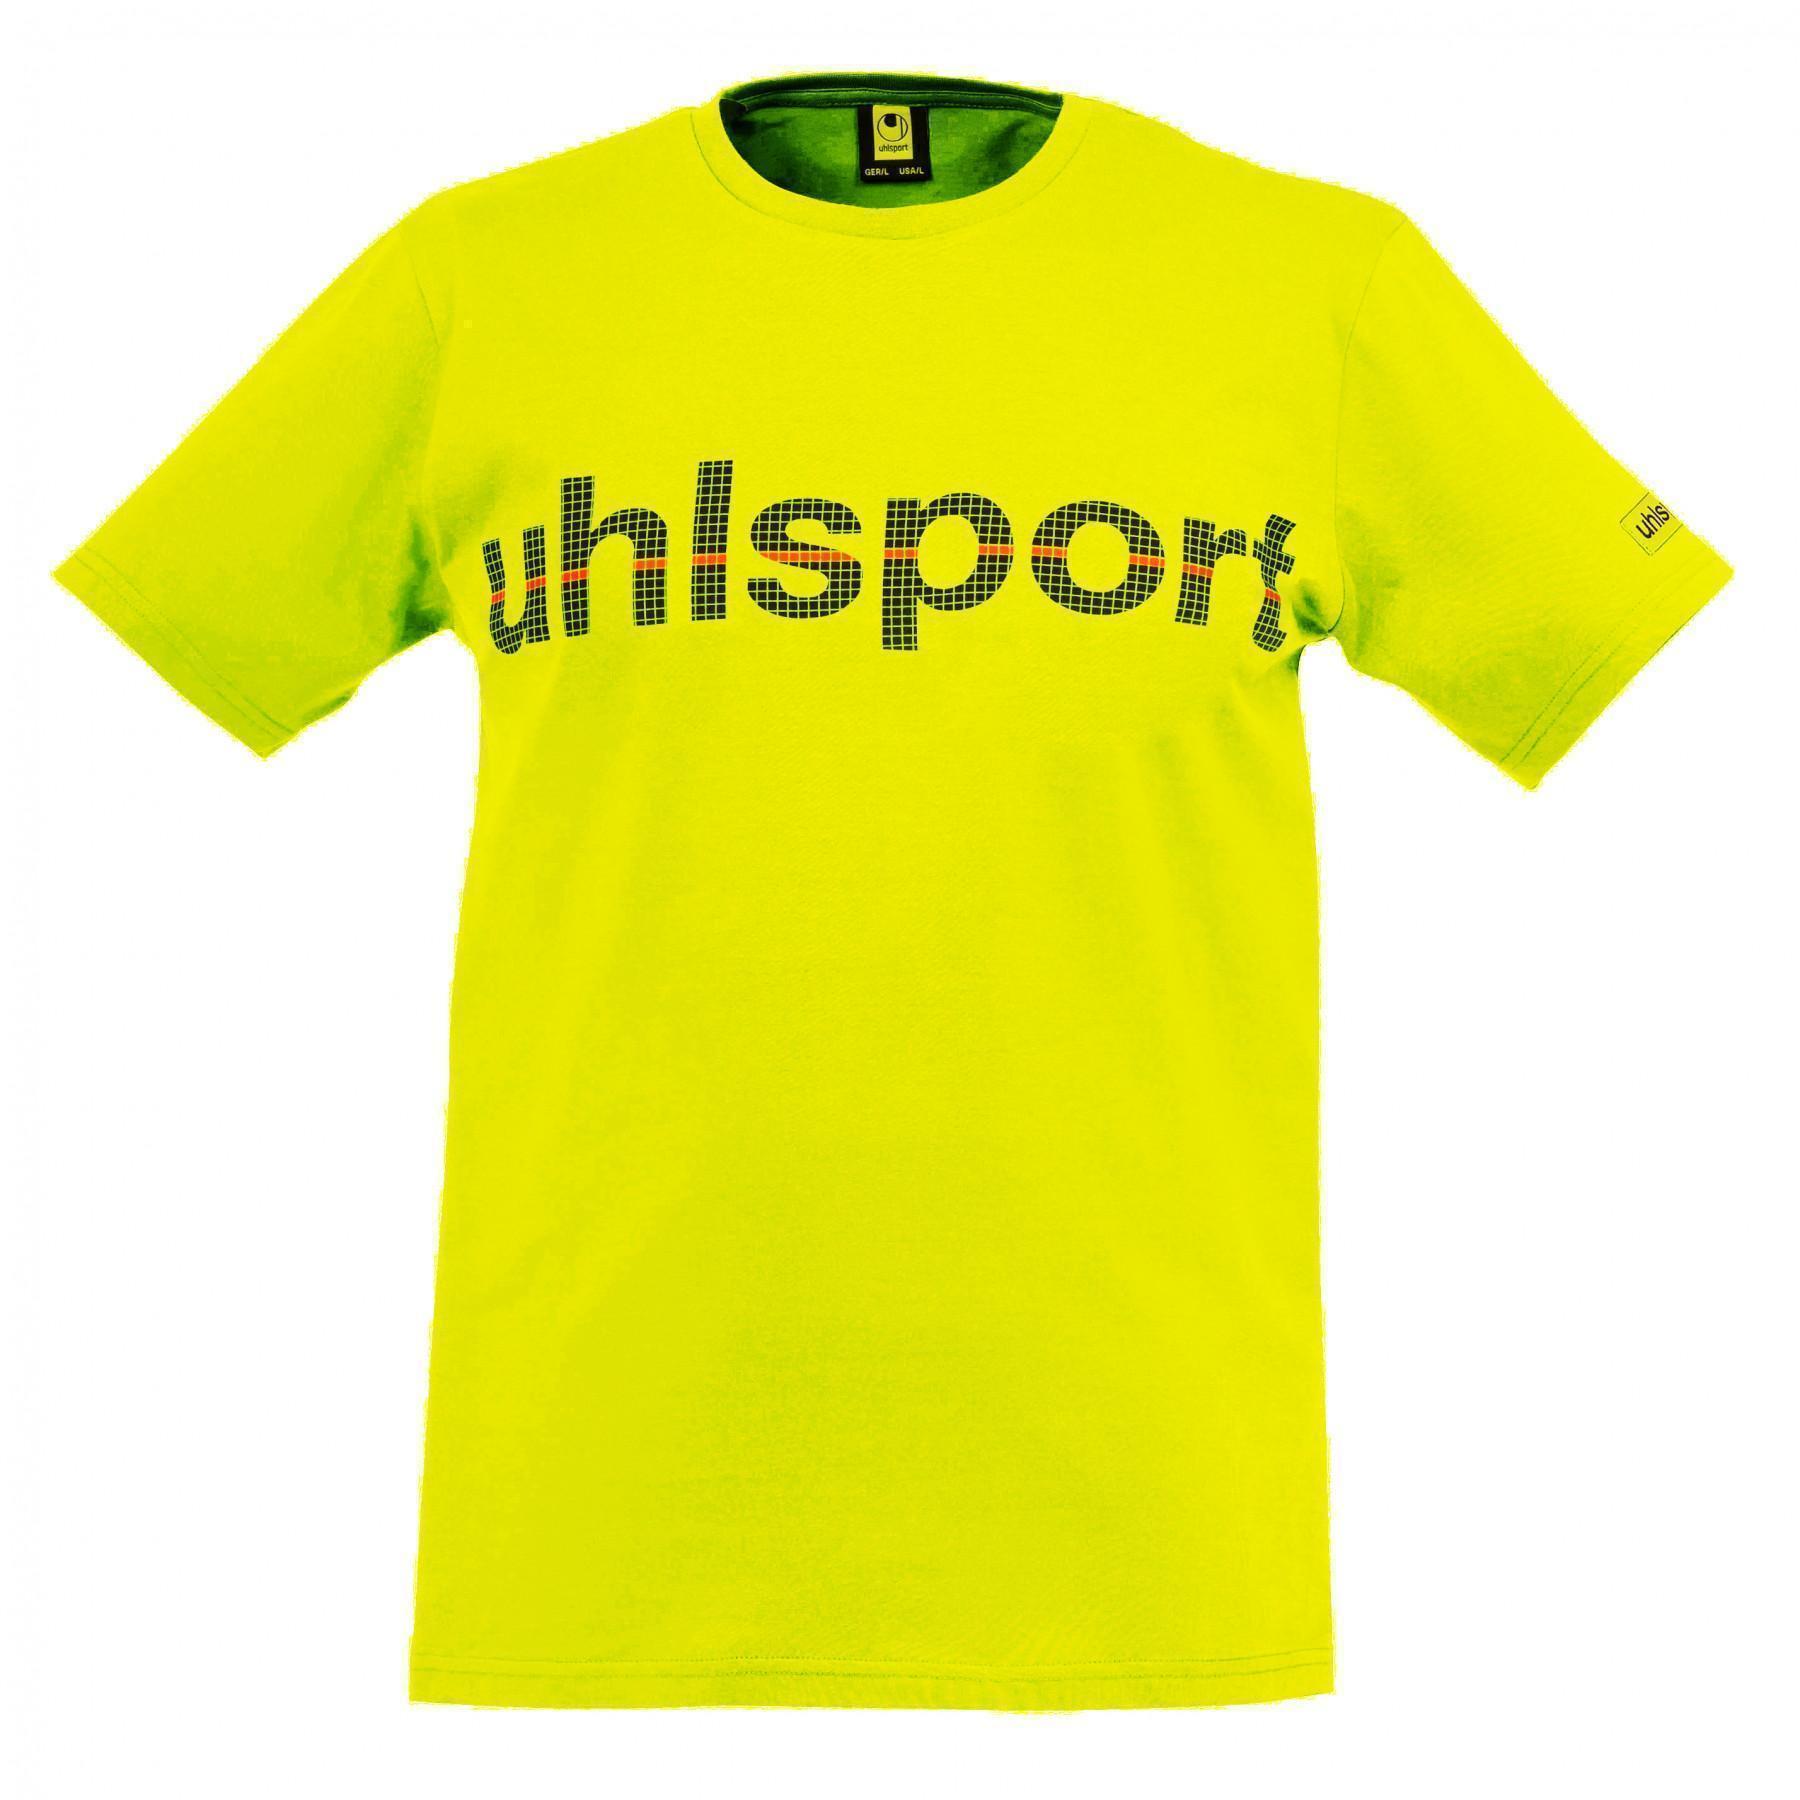 T-shirt Promo Uhlsport Essential